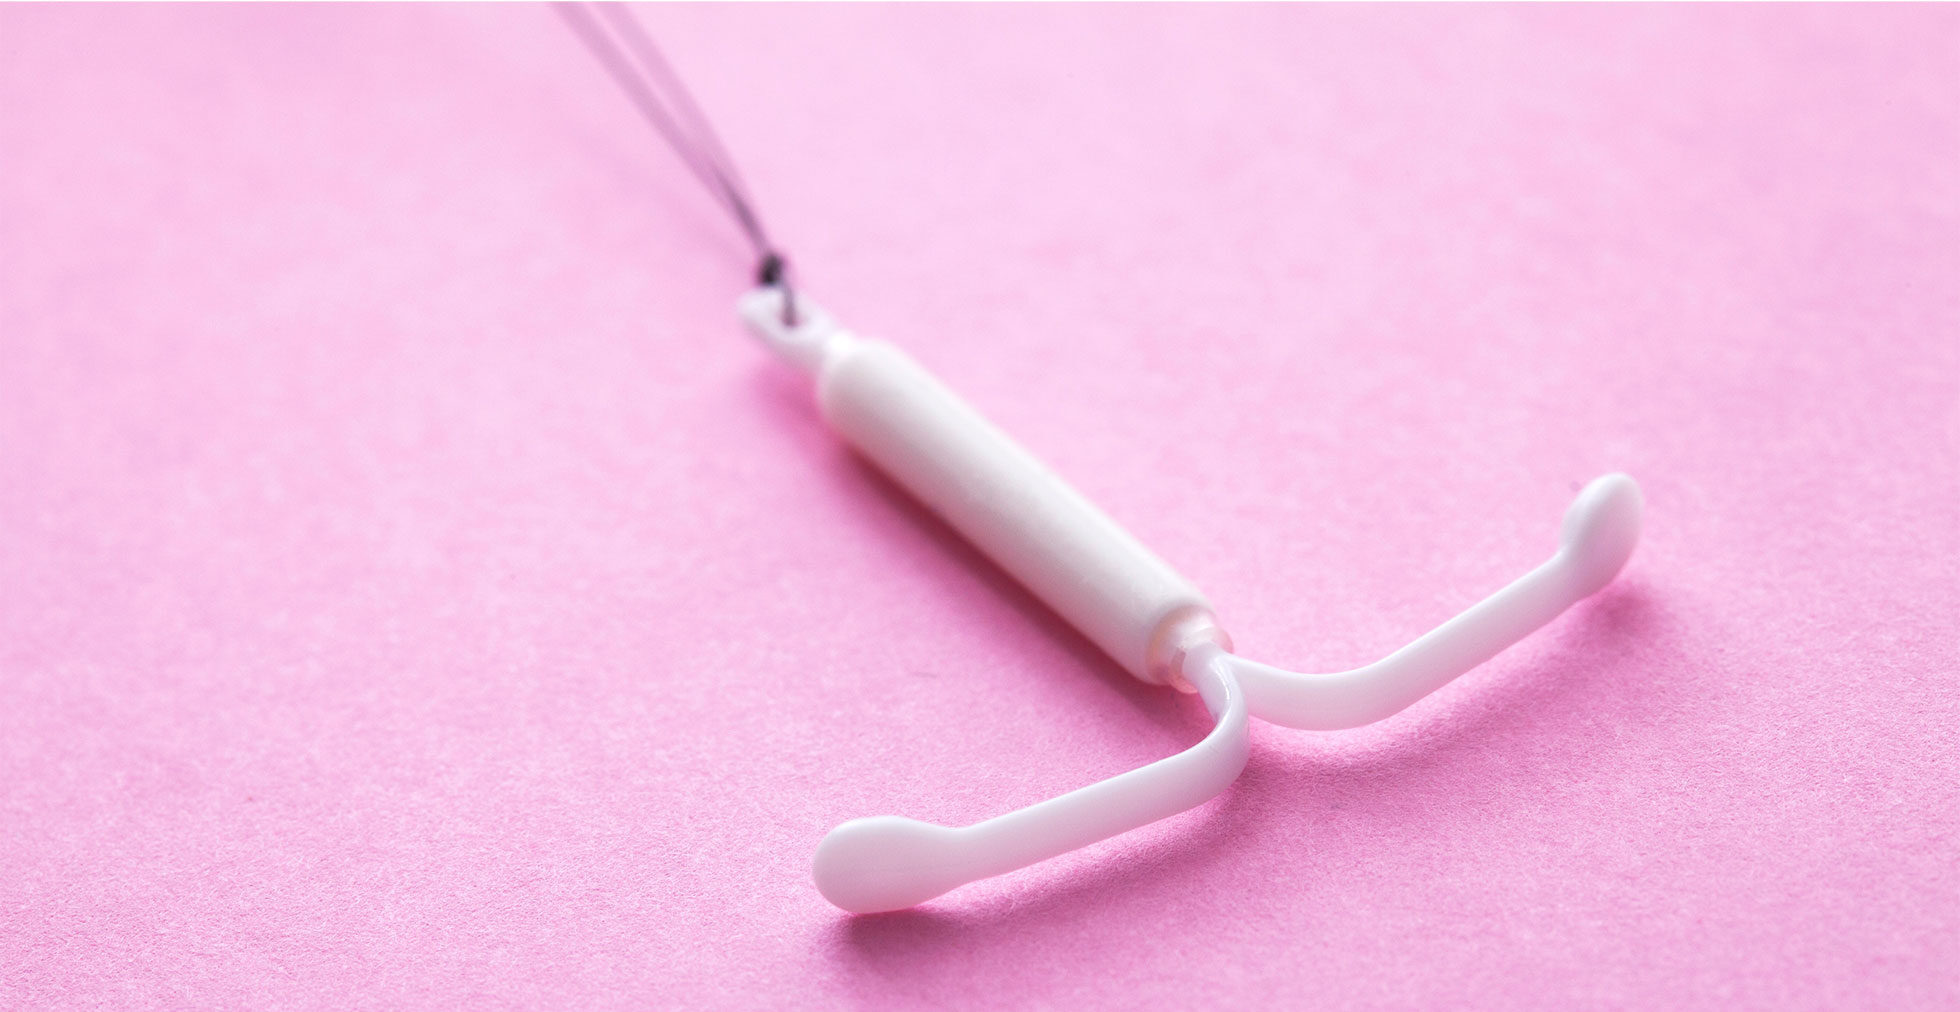 Wie wirkt die Hormonspirale (IUD)?